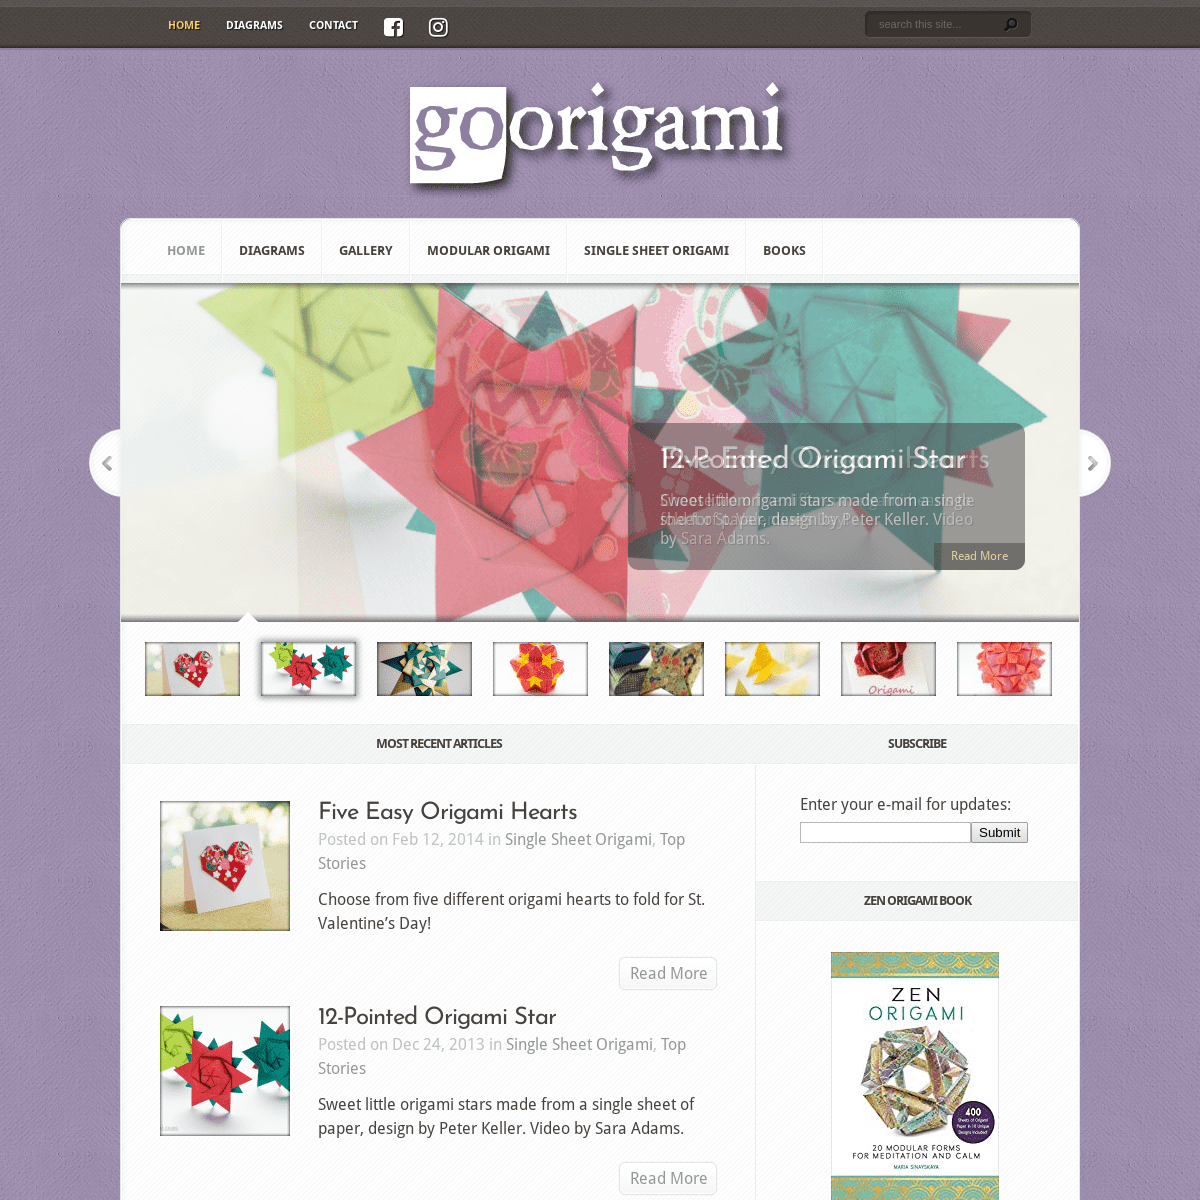 A complete backup of goorigami.com